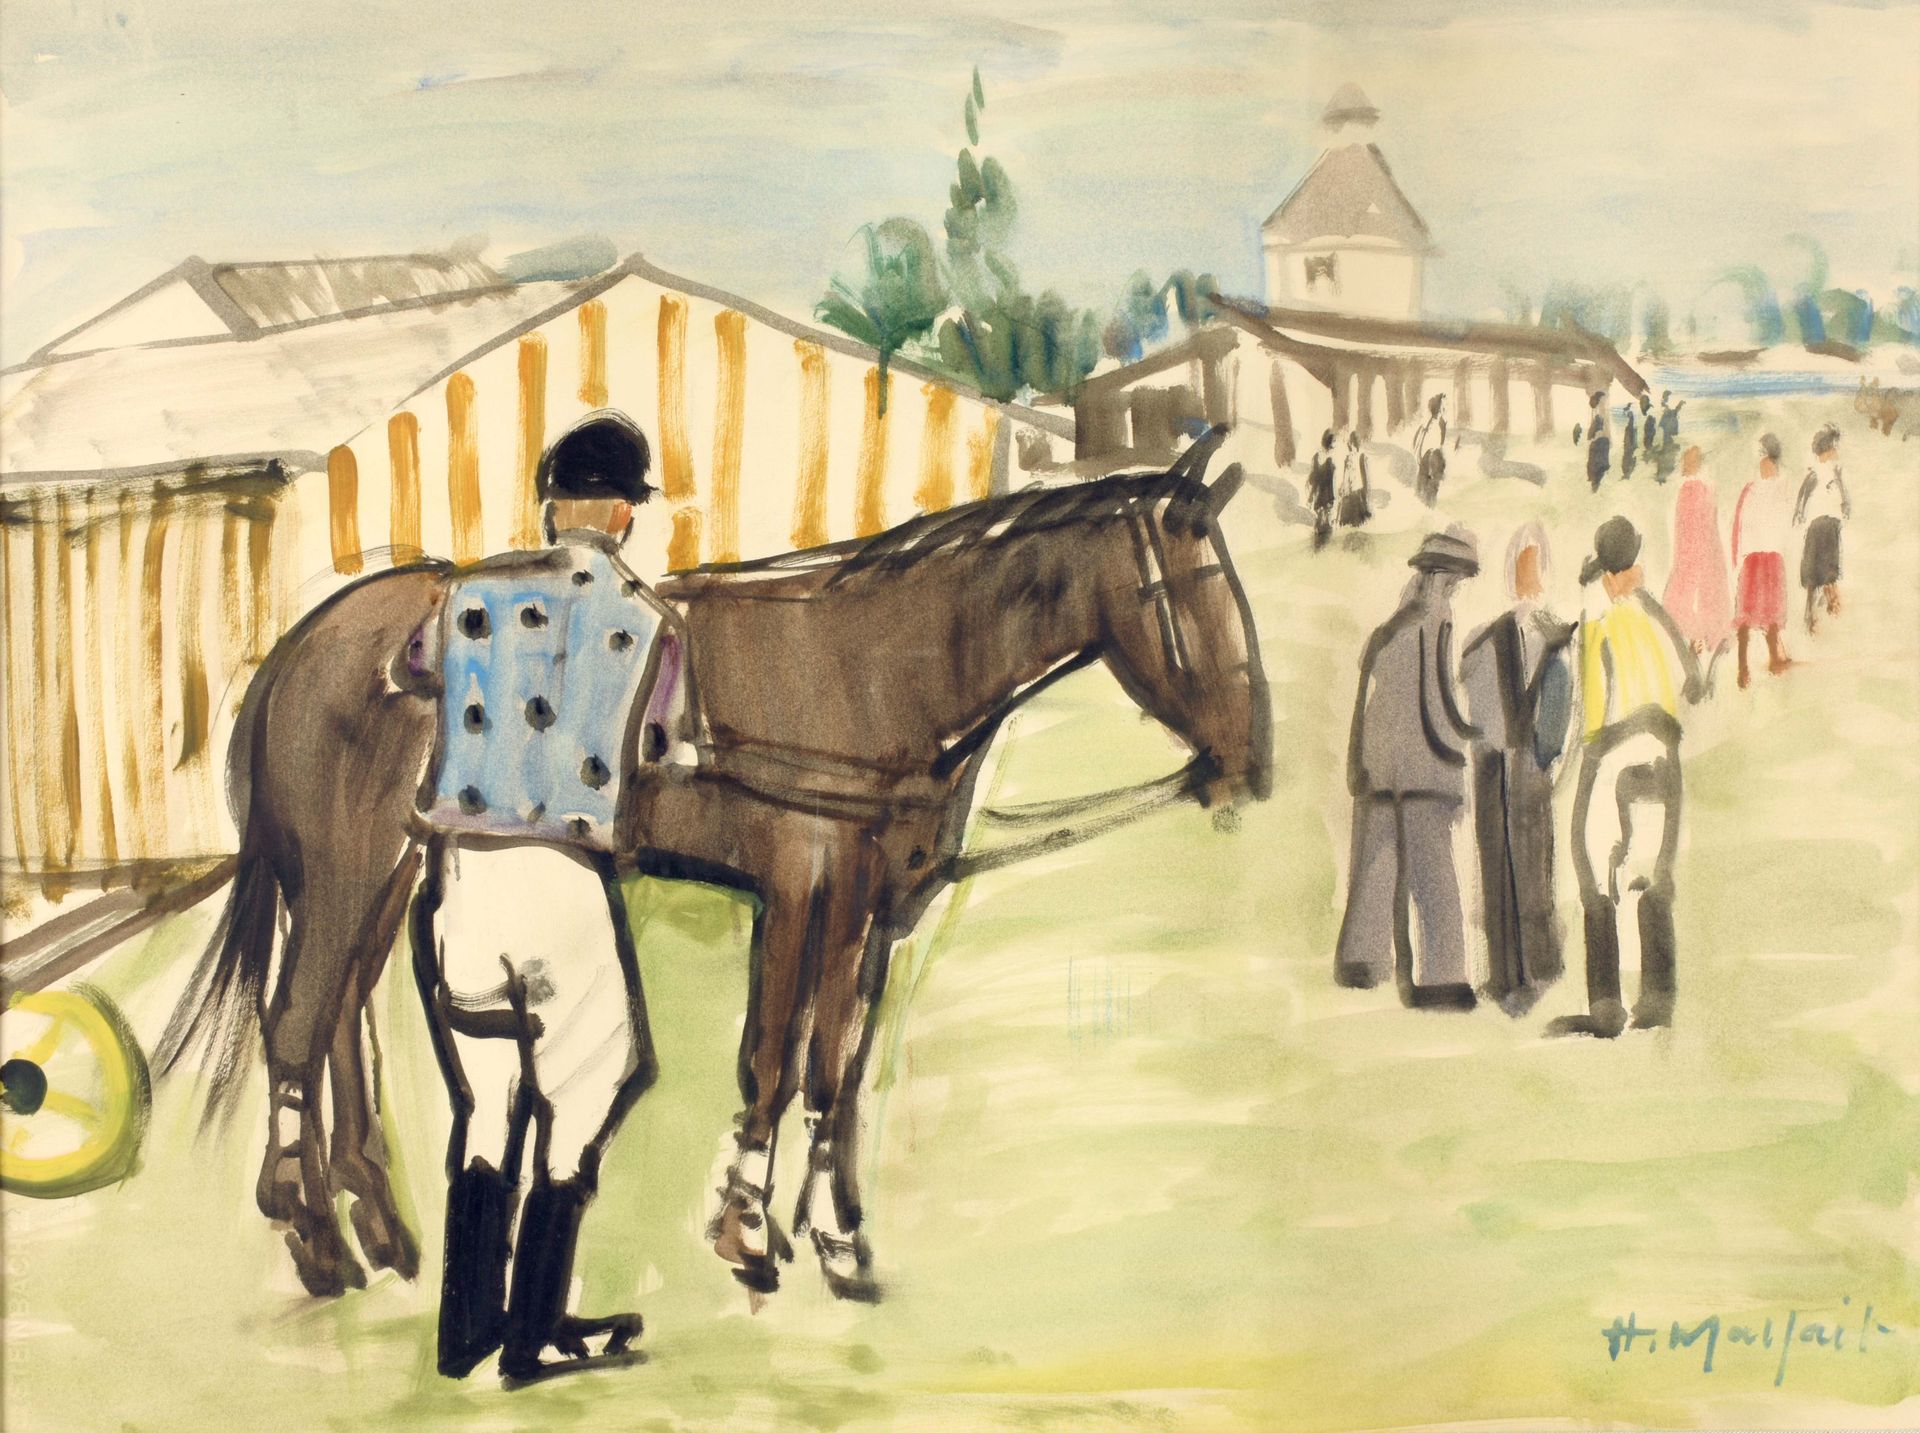 MALFAIT, Hubert (1898-1971) Ruiter en paard op renbaan

Aquarell (53 x 70 cm), g&hellip;